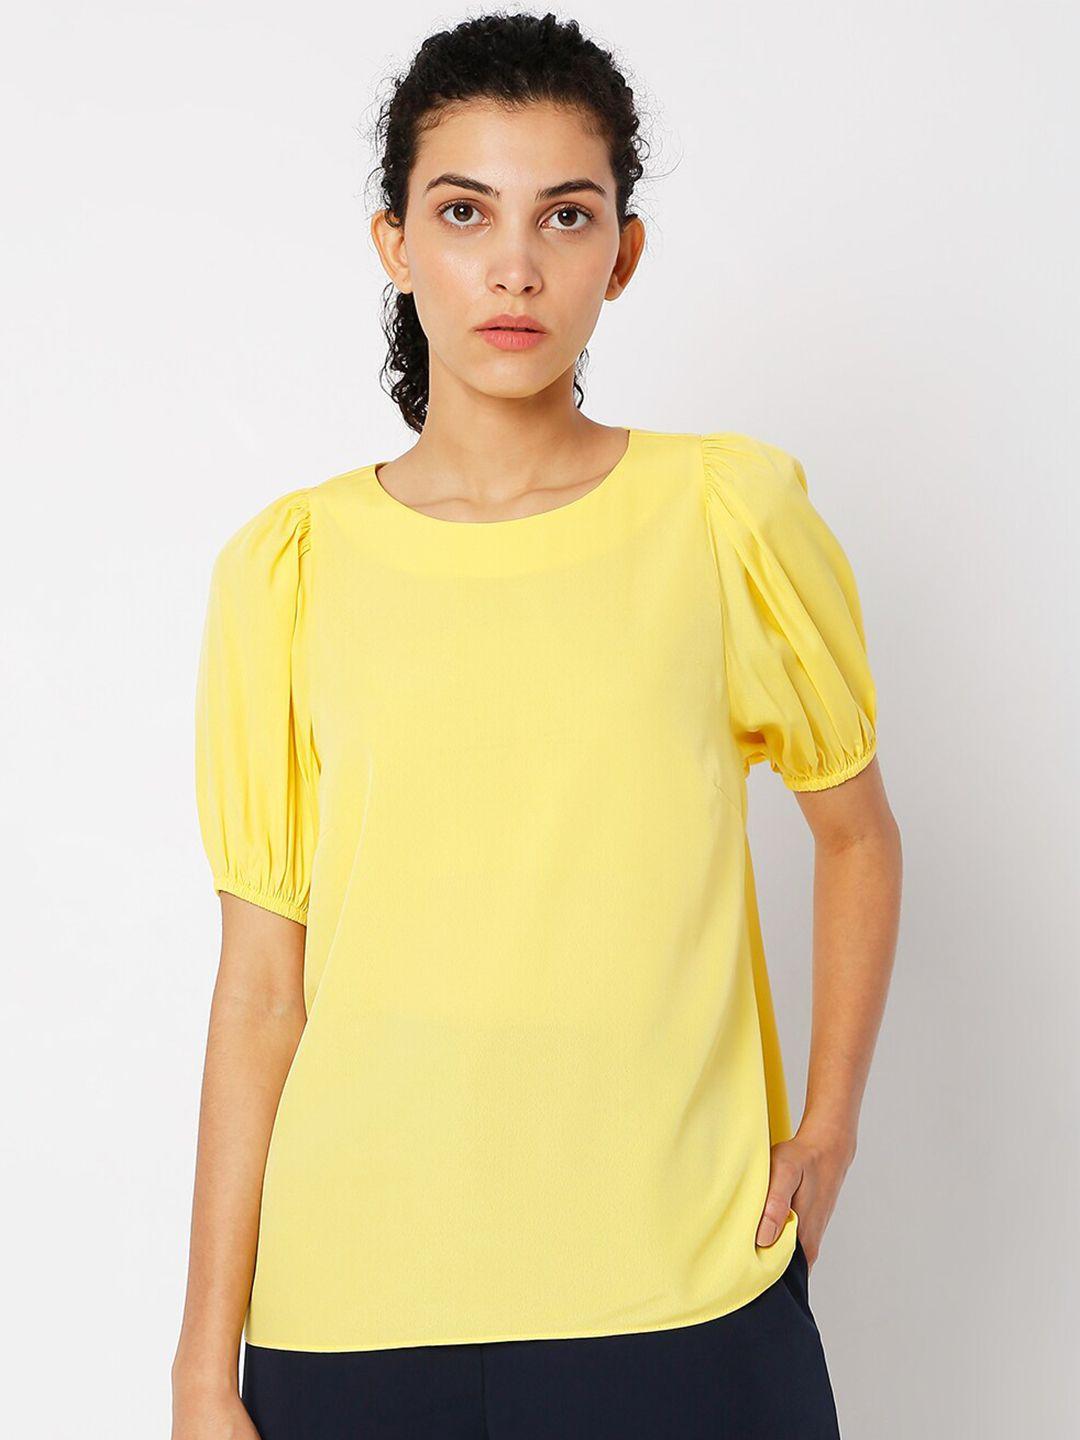 vero moda women yellow solid top